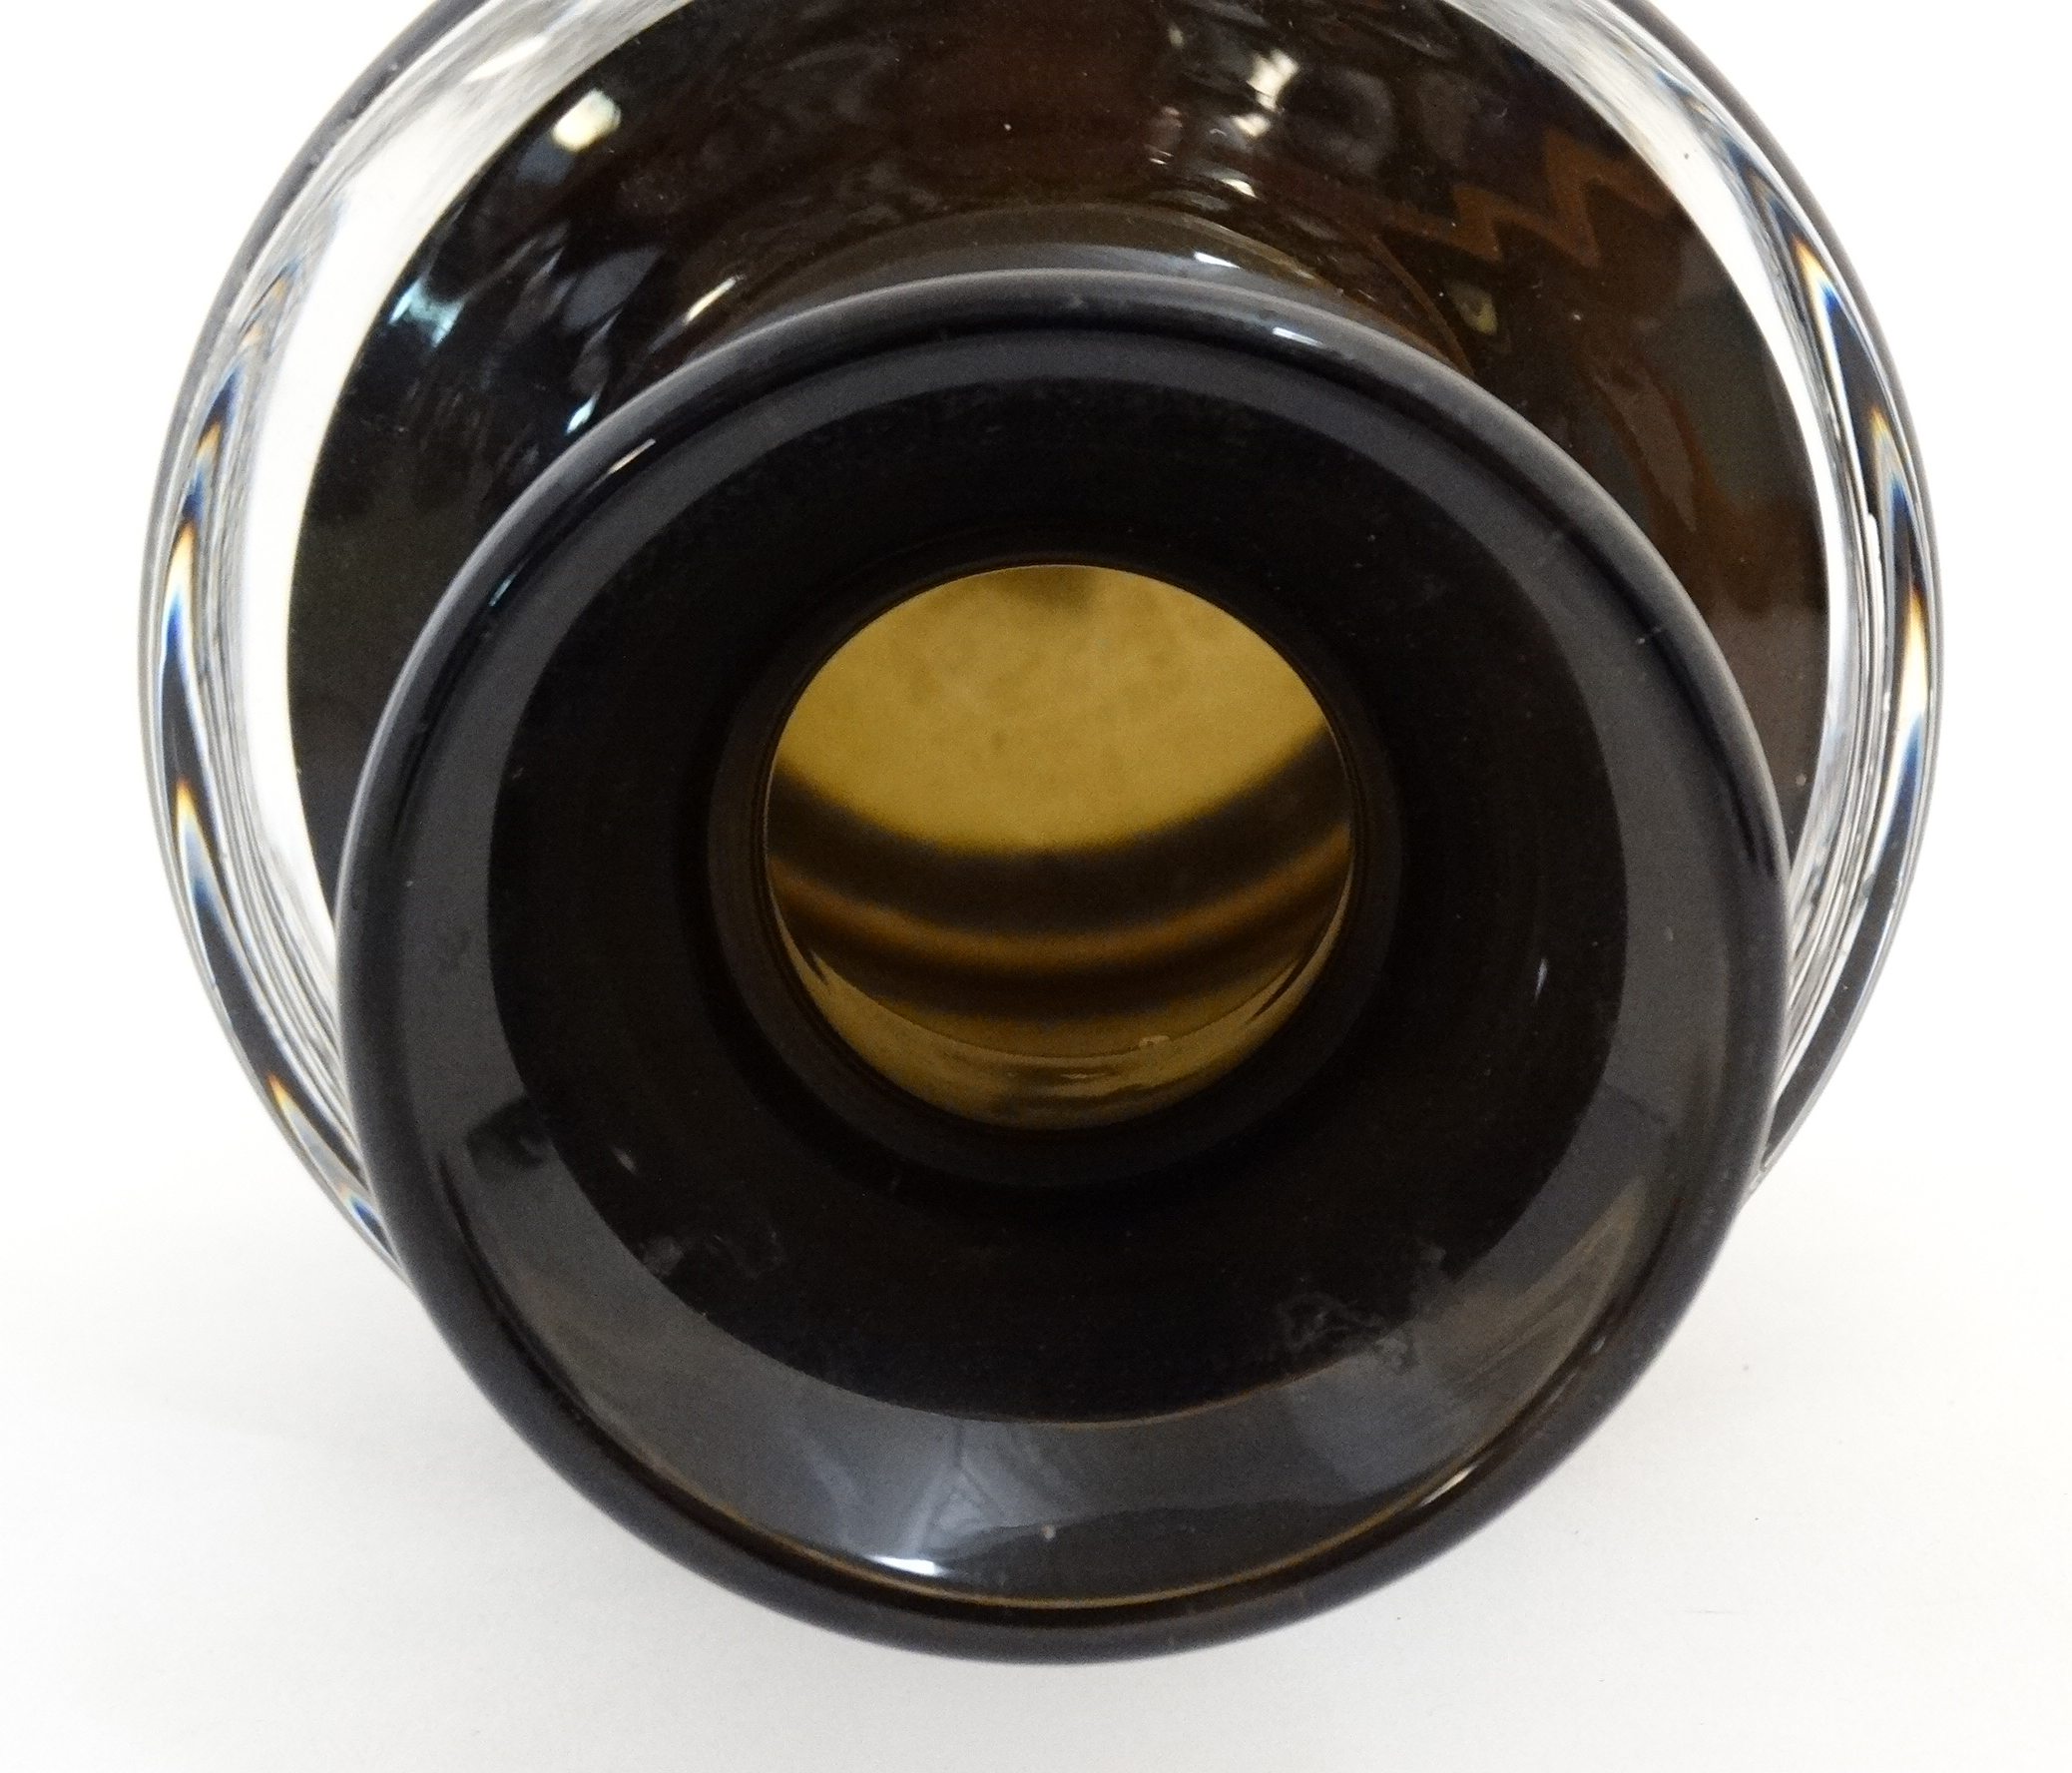 Scandinavian Art Glass : A vintage Swedish art glass threaded 'Spun' bottle vase designed by Bengt - Image 4 of 4